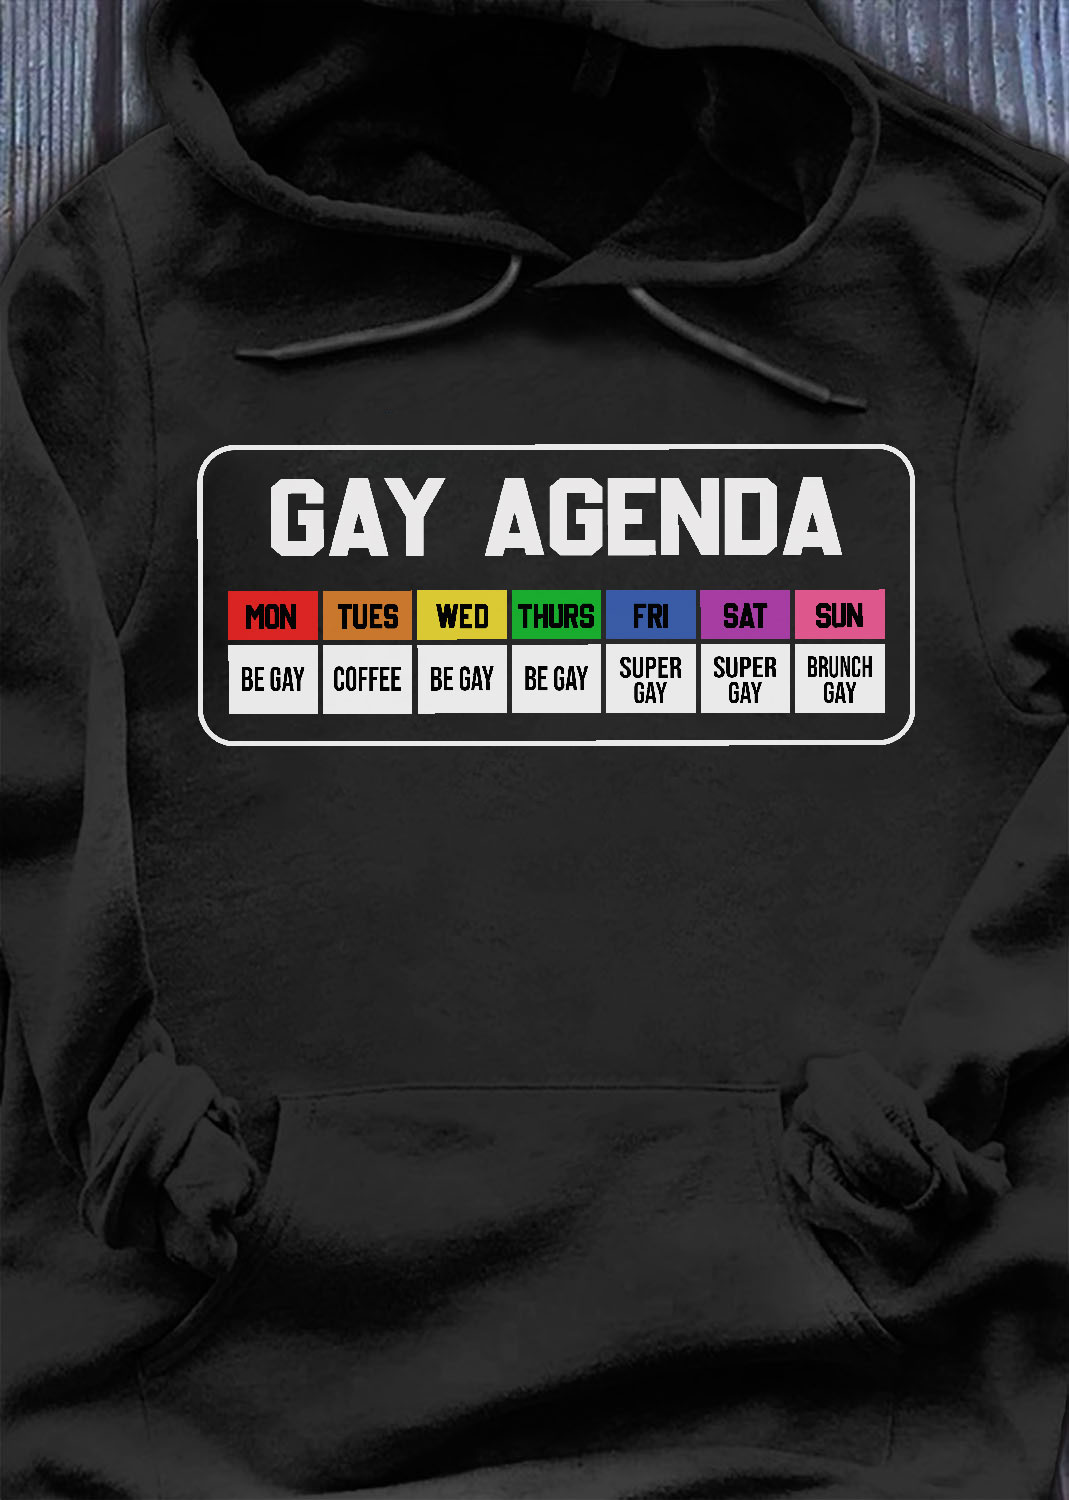 Gay Agenda - Be gay, coffee, be gay, be gay, super gay, super gay, brunch gay